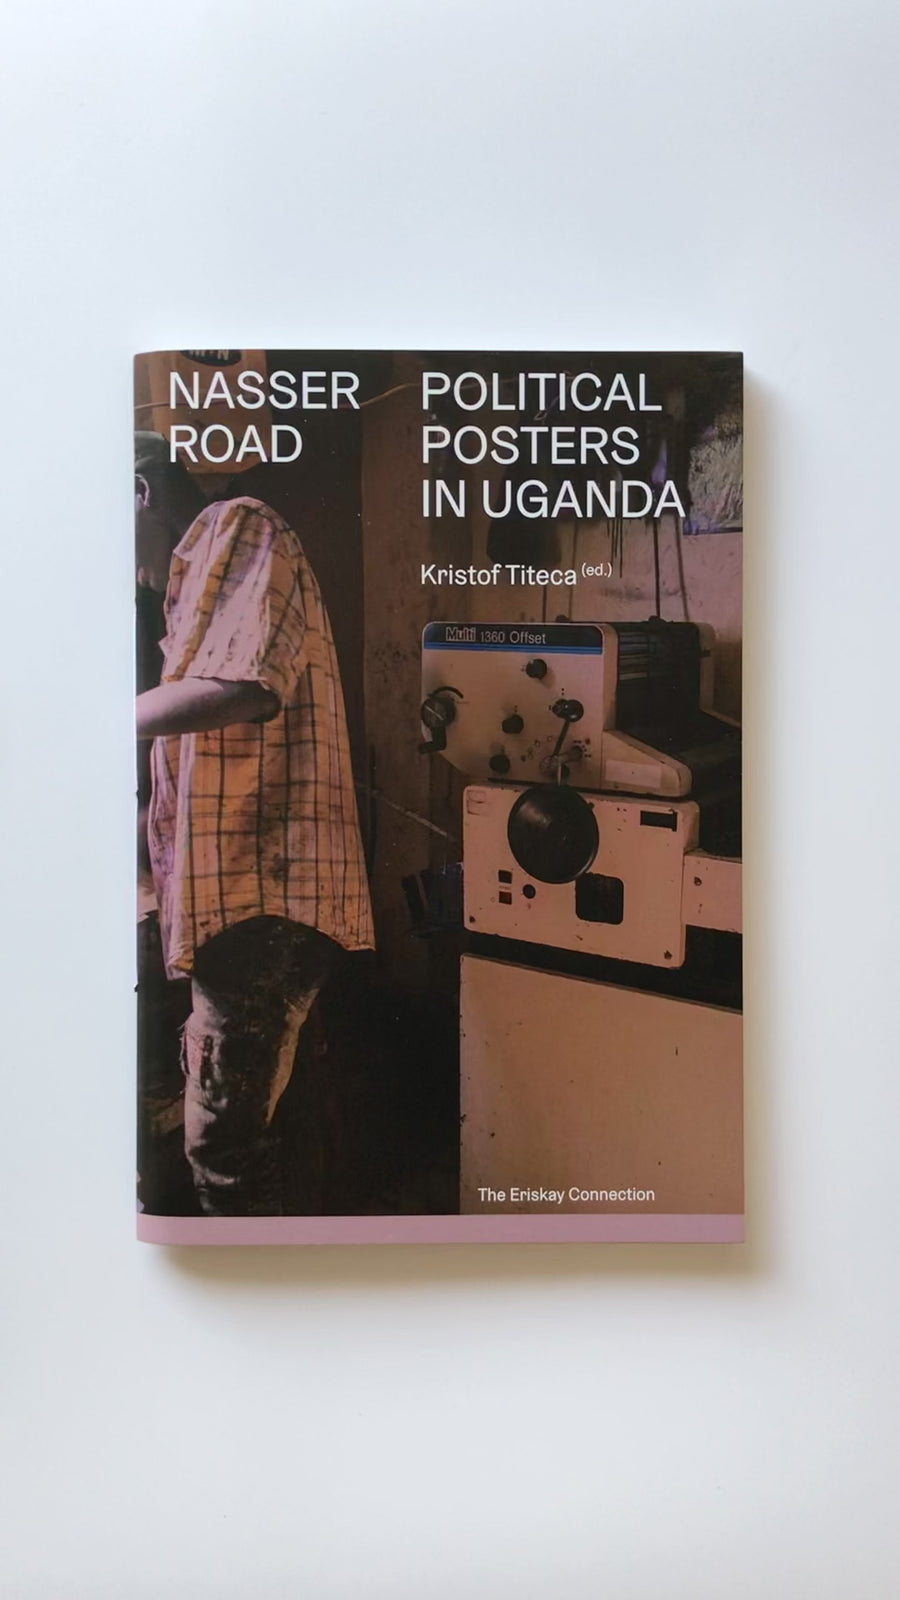 Nasser Road / Political Posters in Uganda